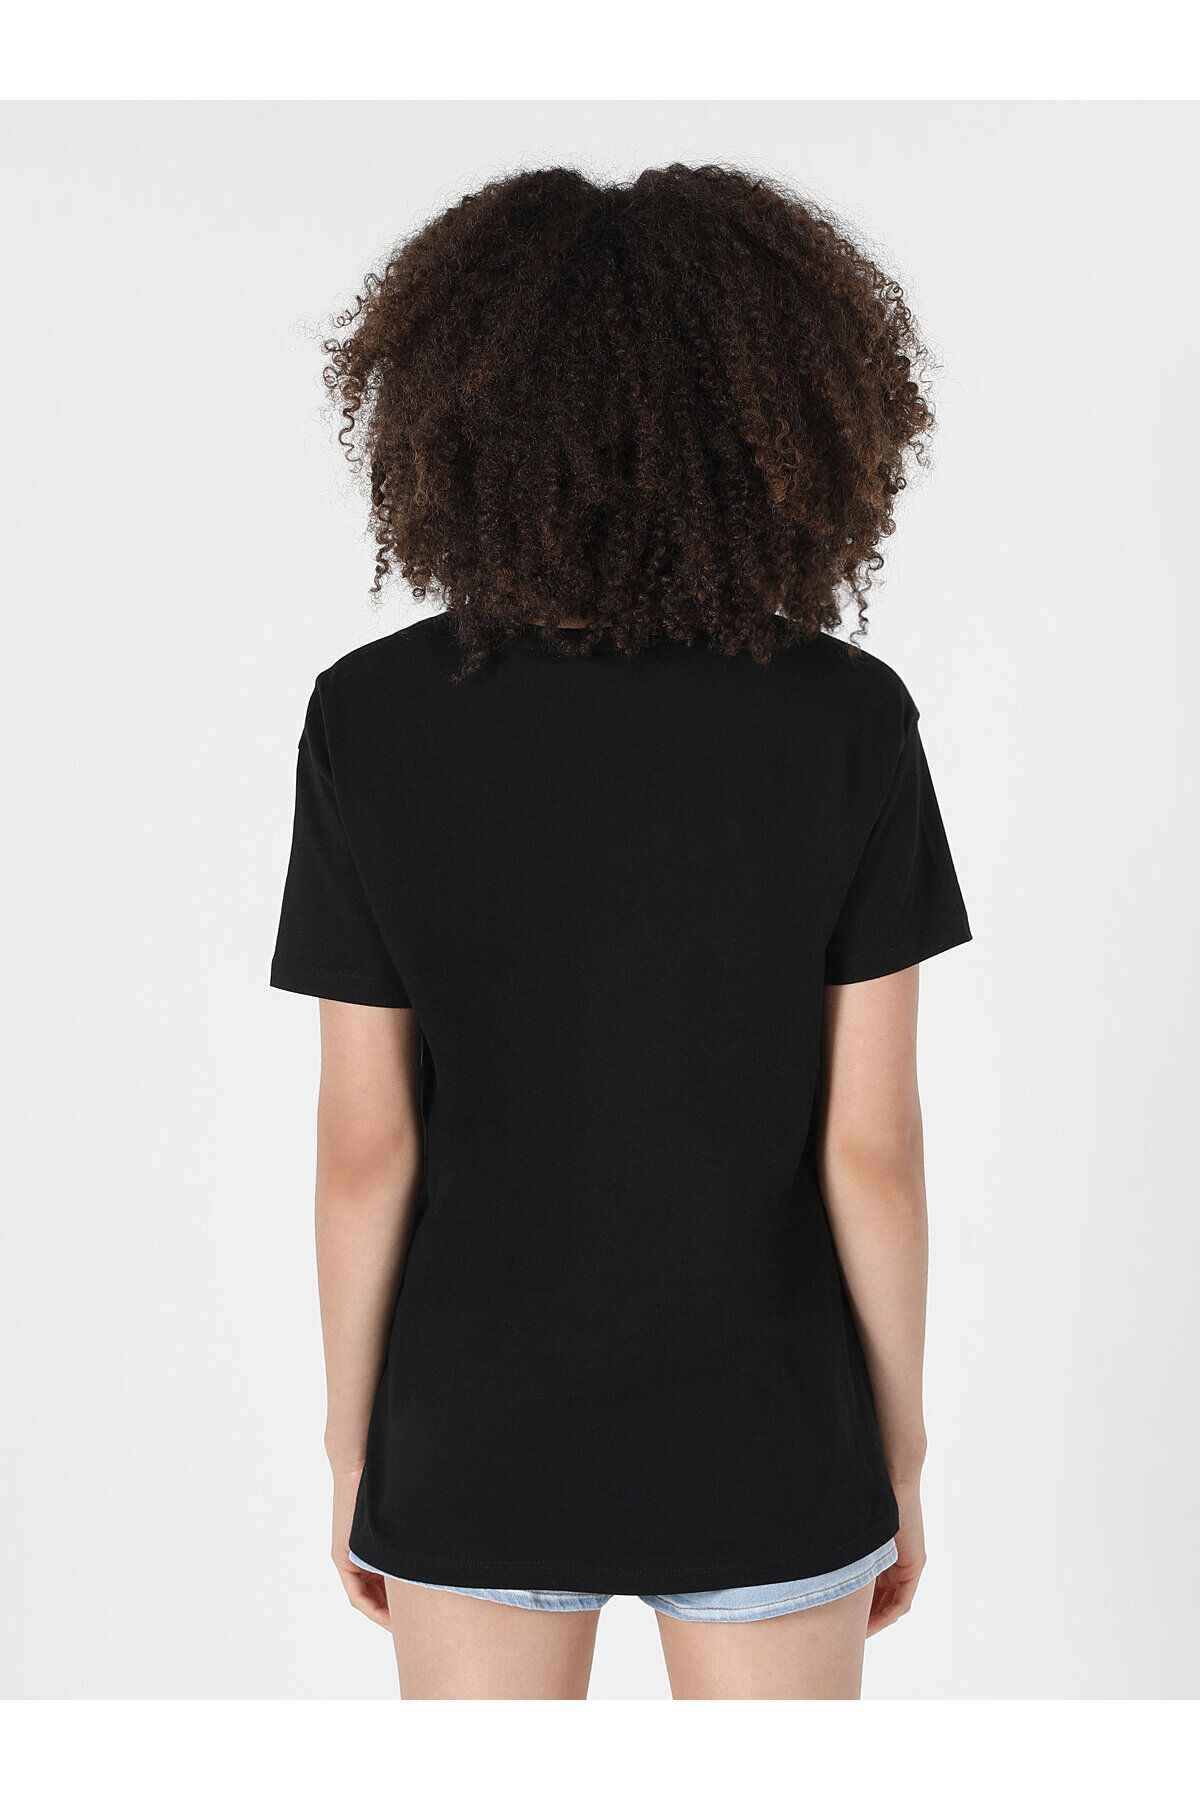 Colin’s تی شرت آستین کوتاه زنانه با یقه مردانه Comfort Fit چاپ شده